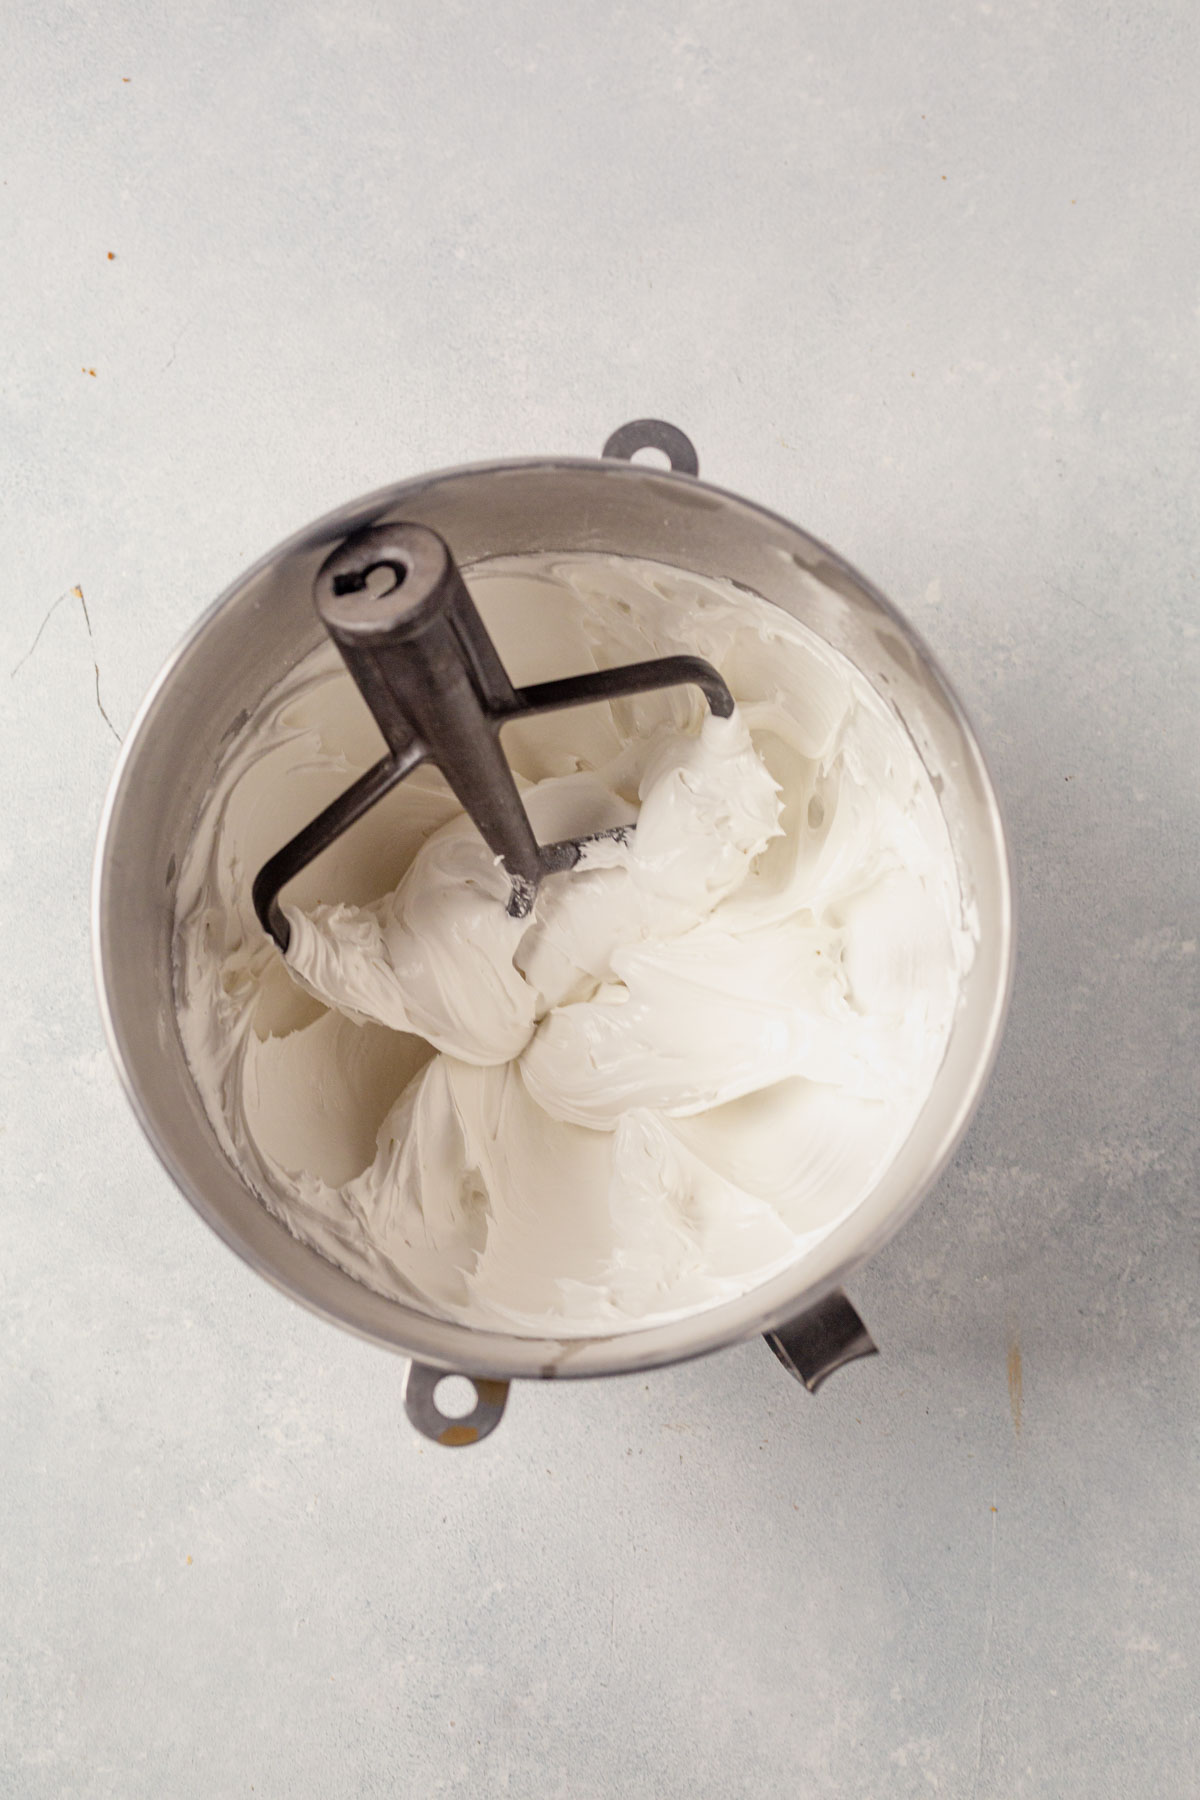 meringue beaten to stiff peaks in a stand mixer